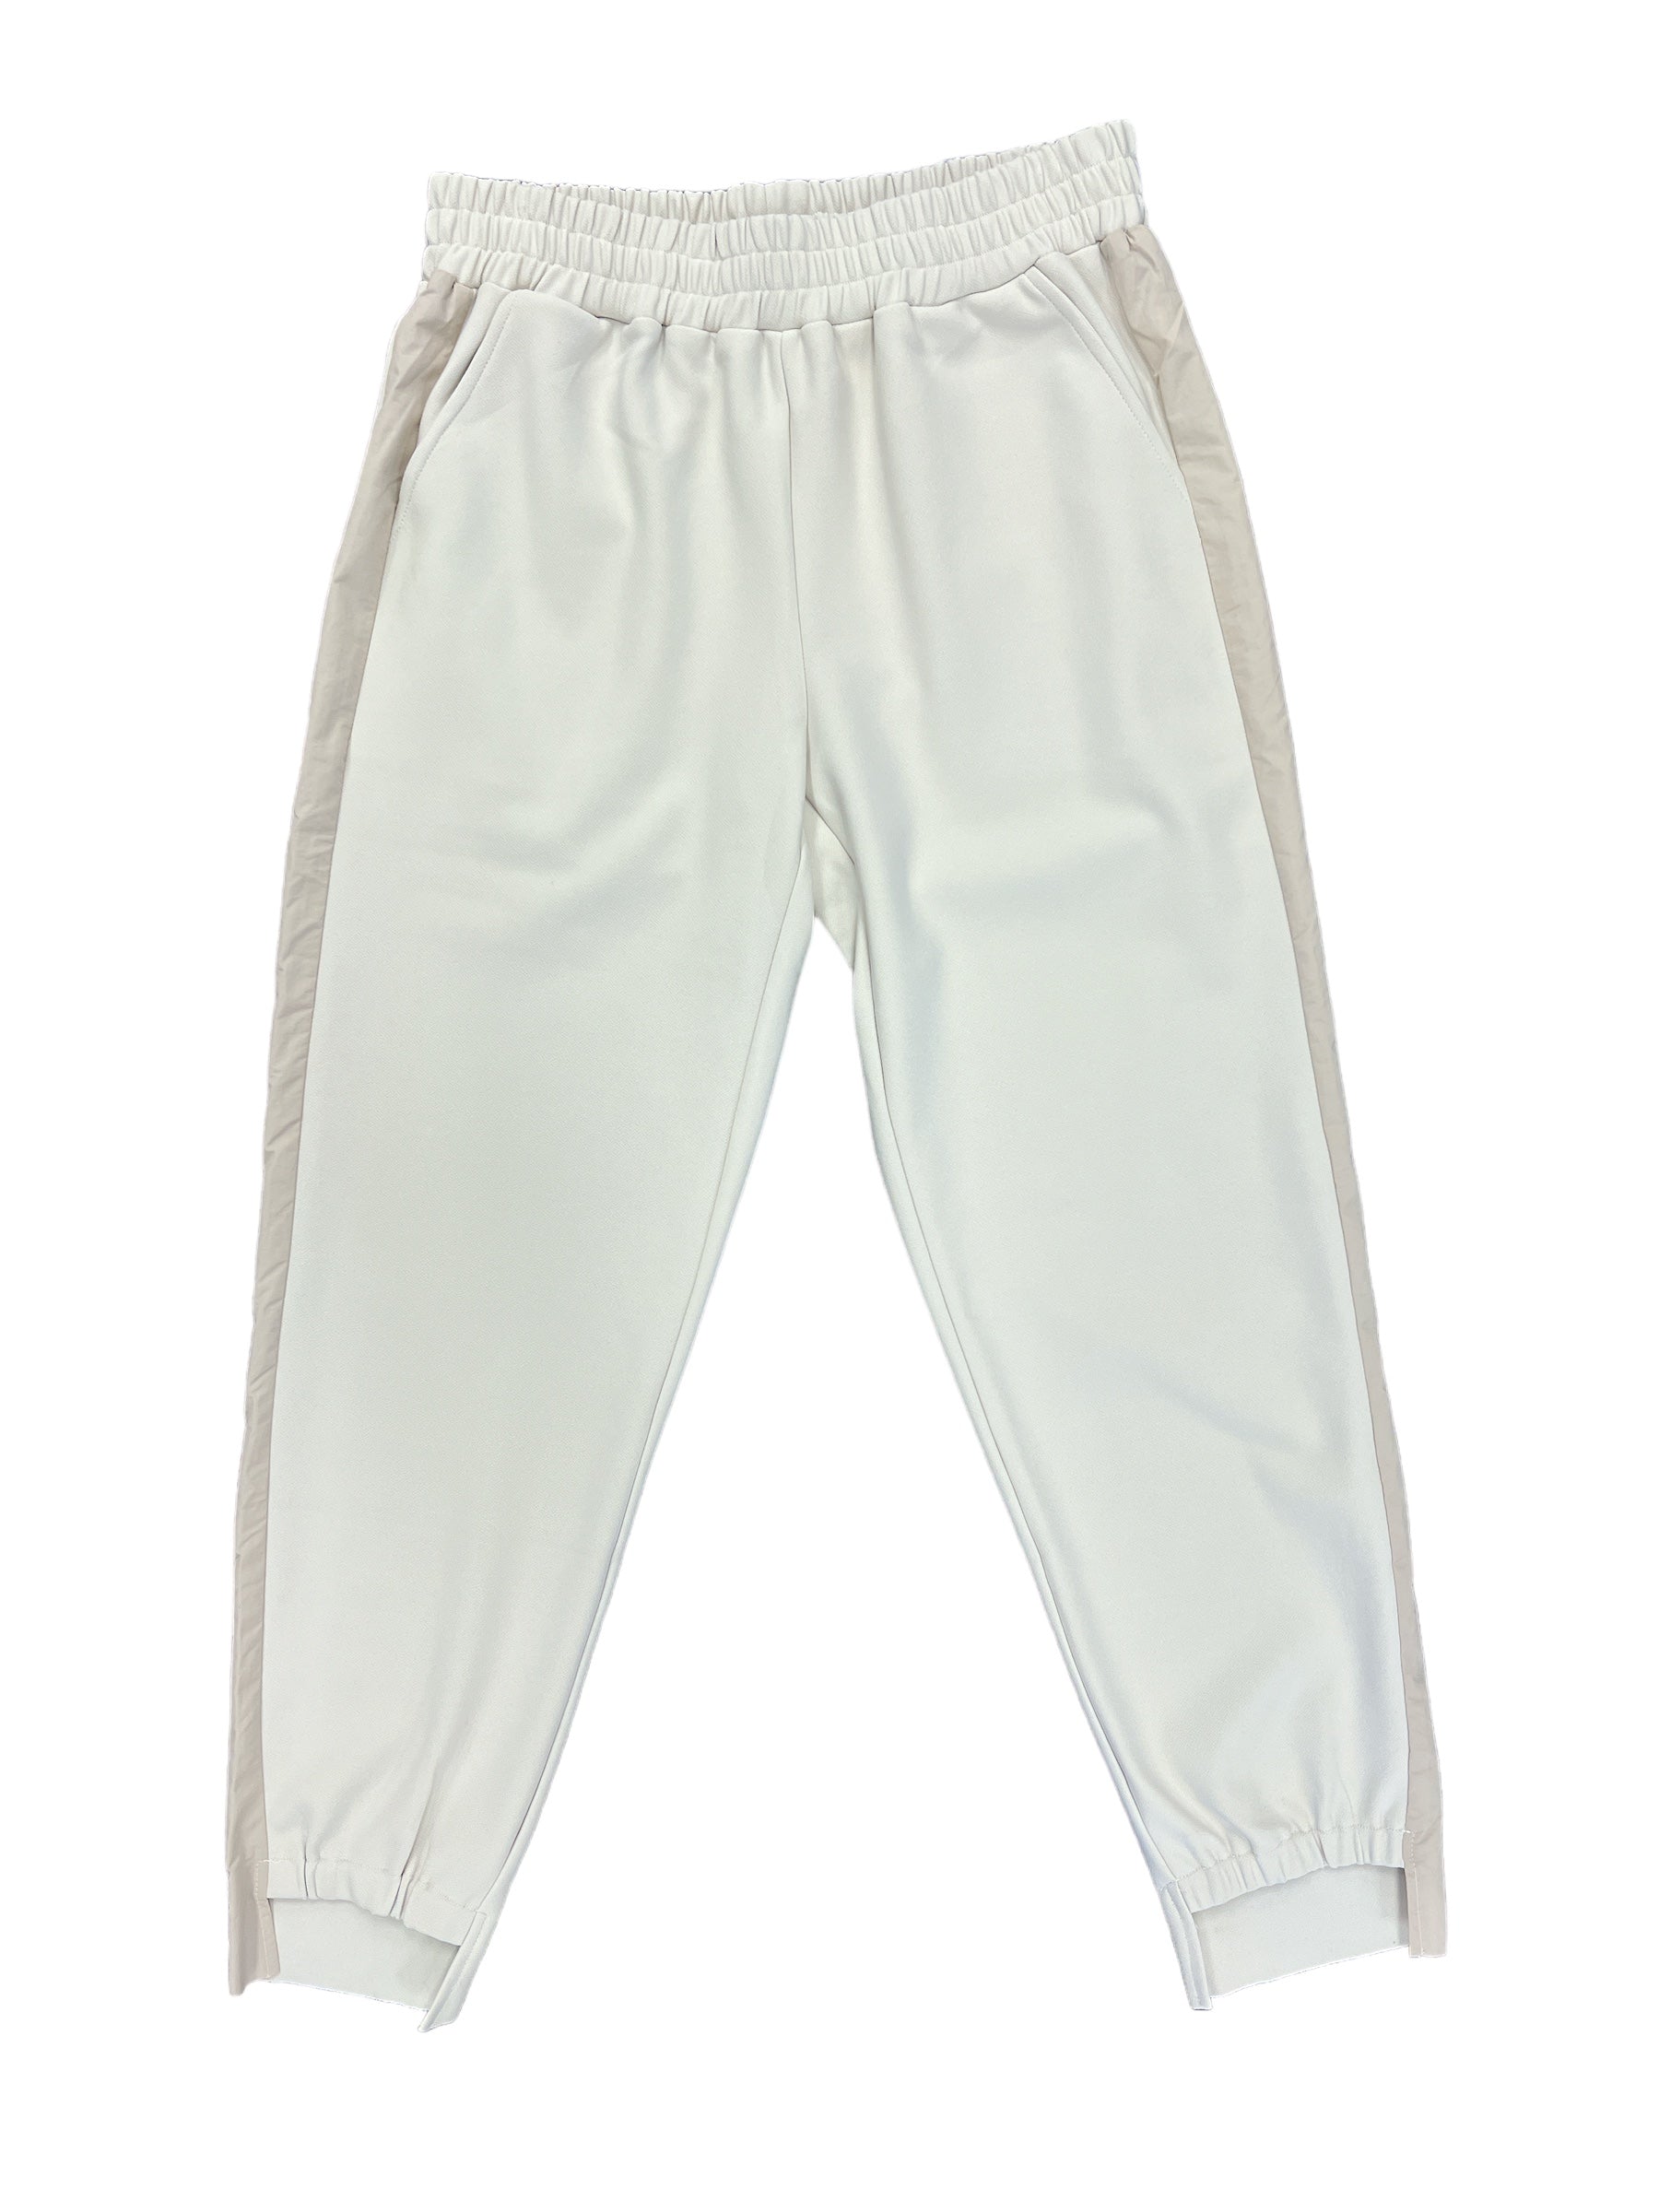 Katie Crepe Pants-230 Pants-joh-Simply Stylish Boutique | Women’s & Kid’s Fashion | Paducah, KY